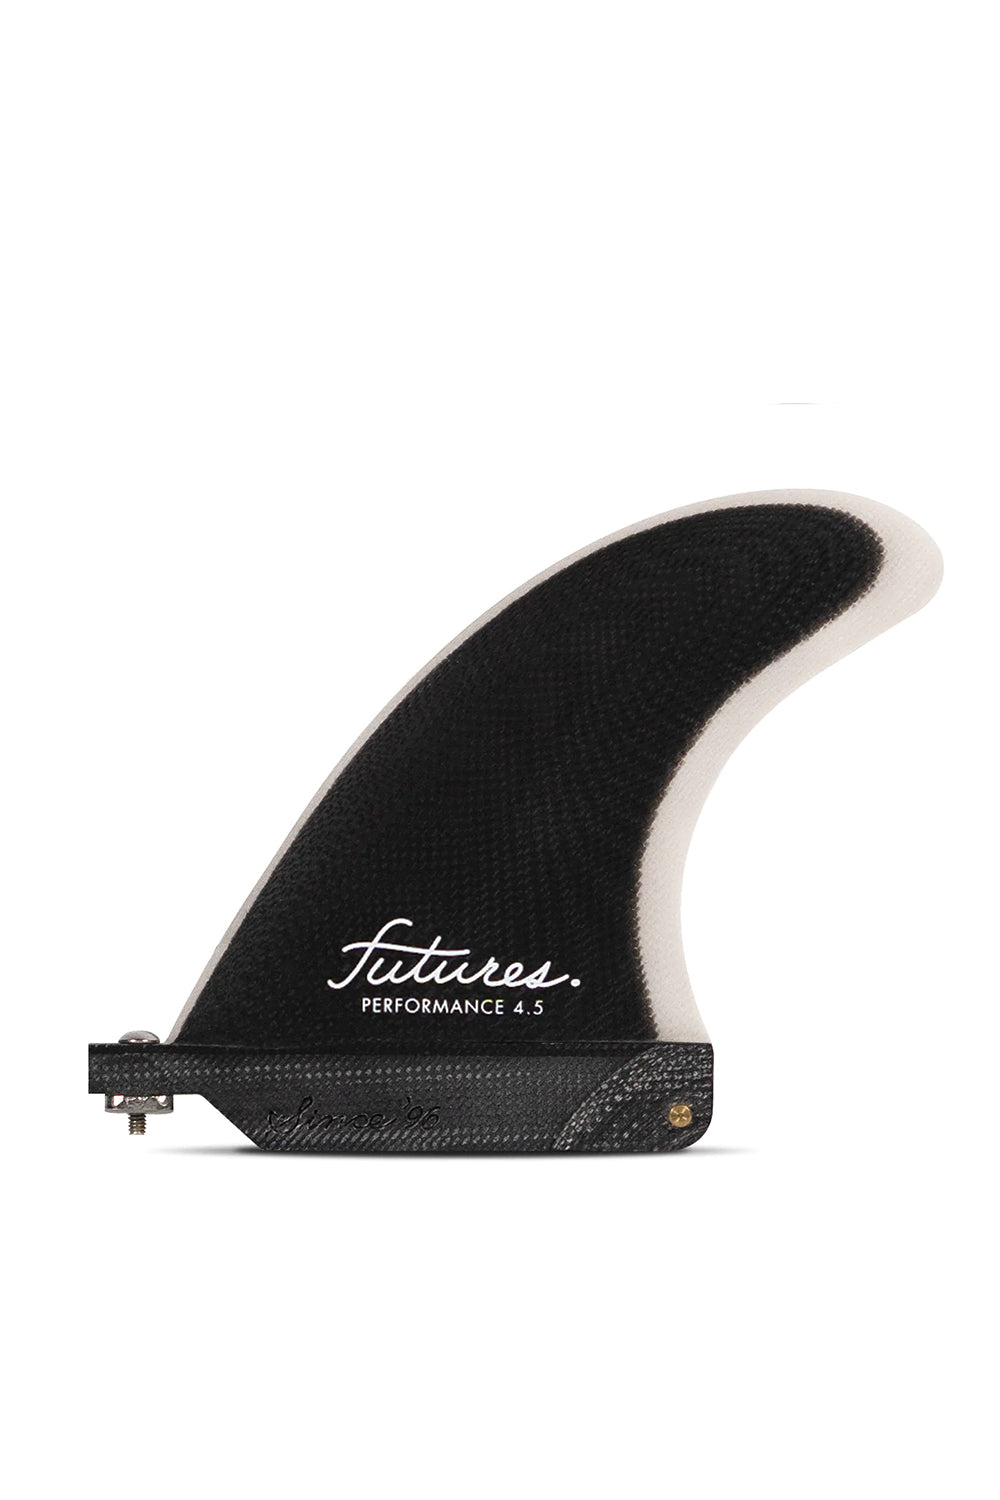 Futures Fins Performance 4.5 Fibreglass Single Longboard Fin - Black/Grey